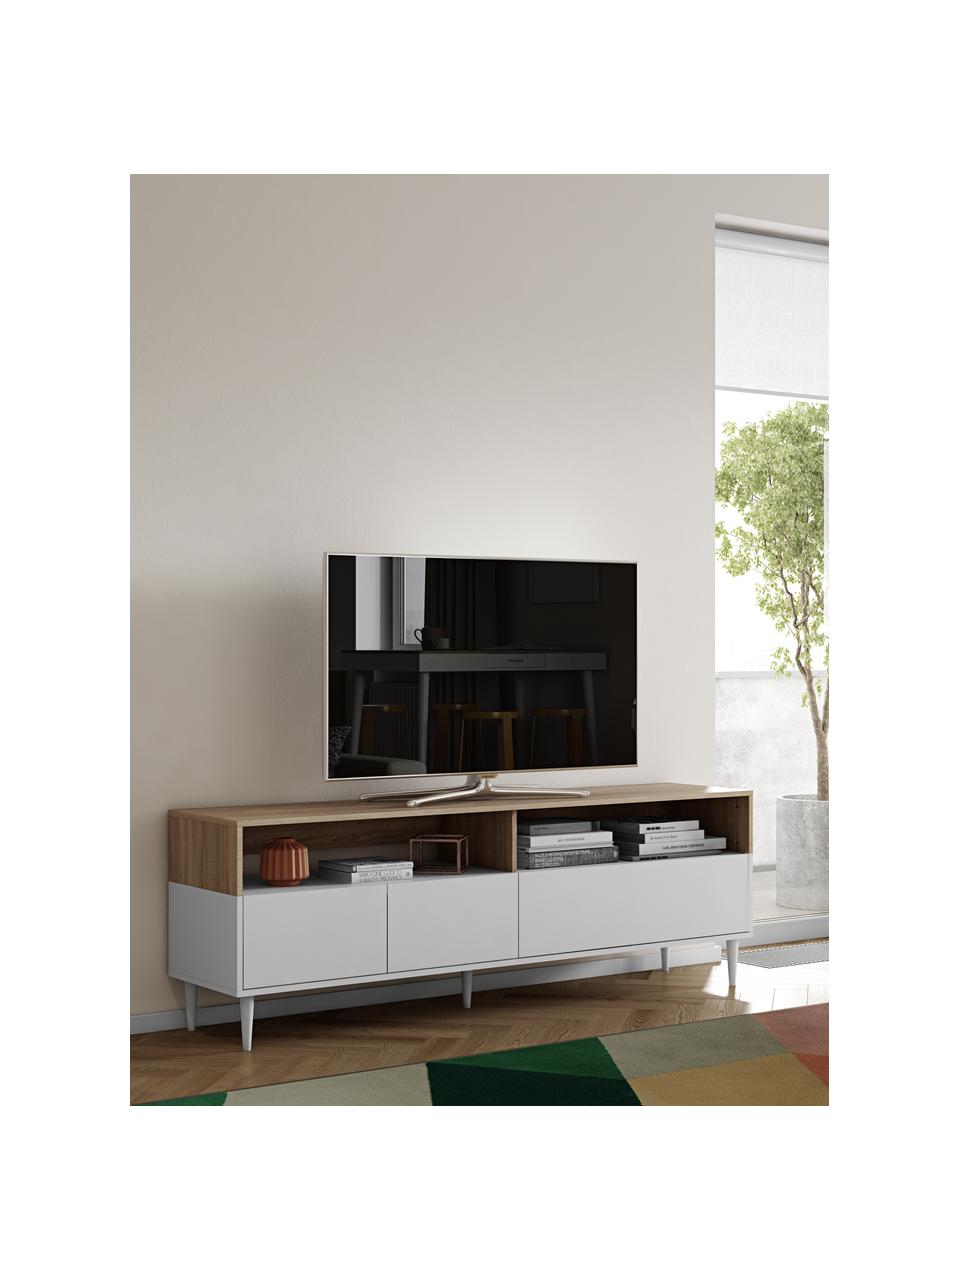 TV-Lowboard Horizon in Weiß mit Eichenholz-Optik, Füße: Buchenholz, massiv, lacki, Eichenholz, Weiß, 180 x 61 cm